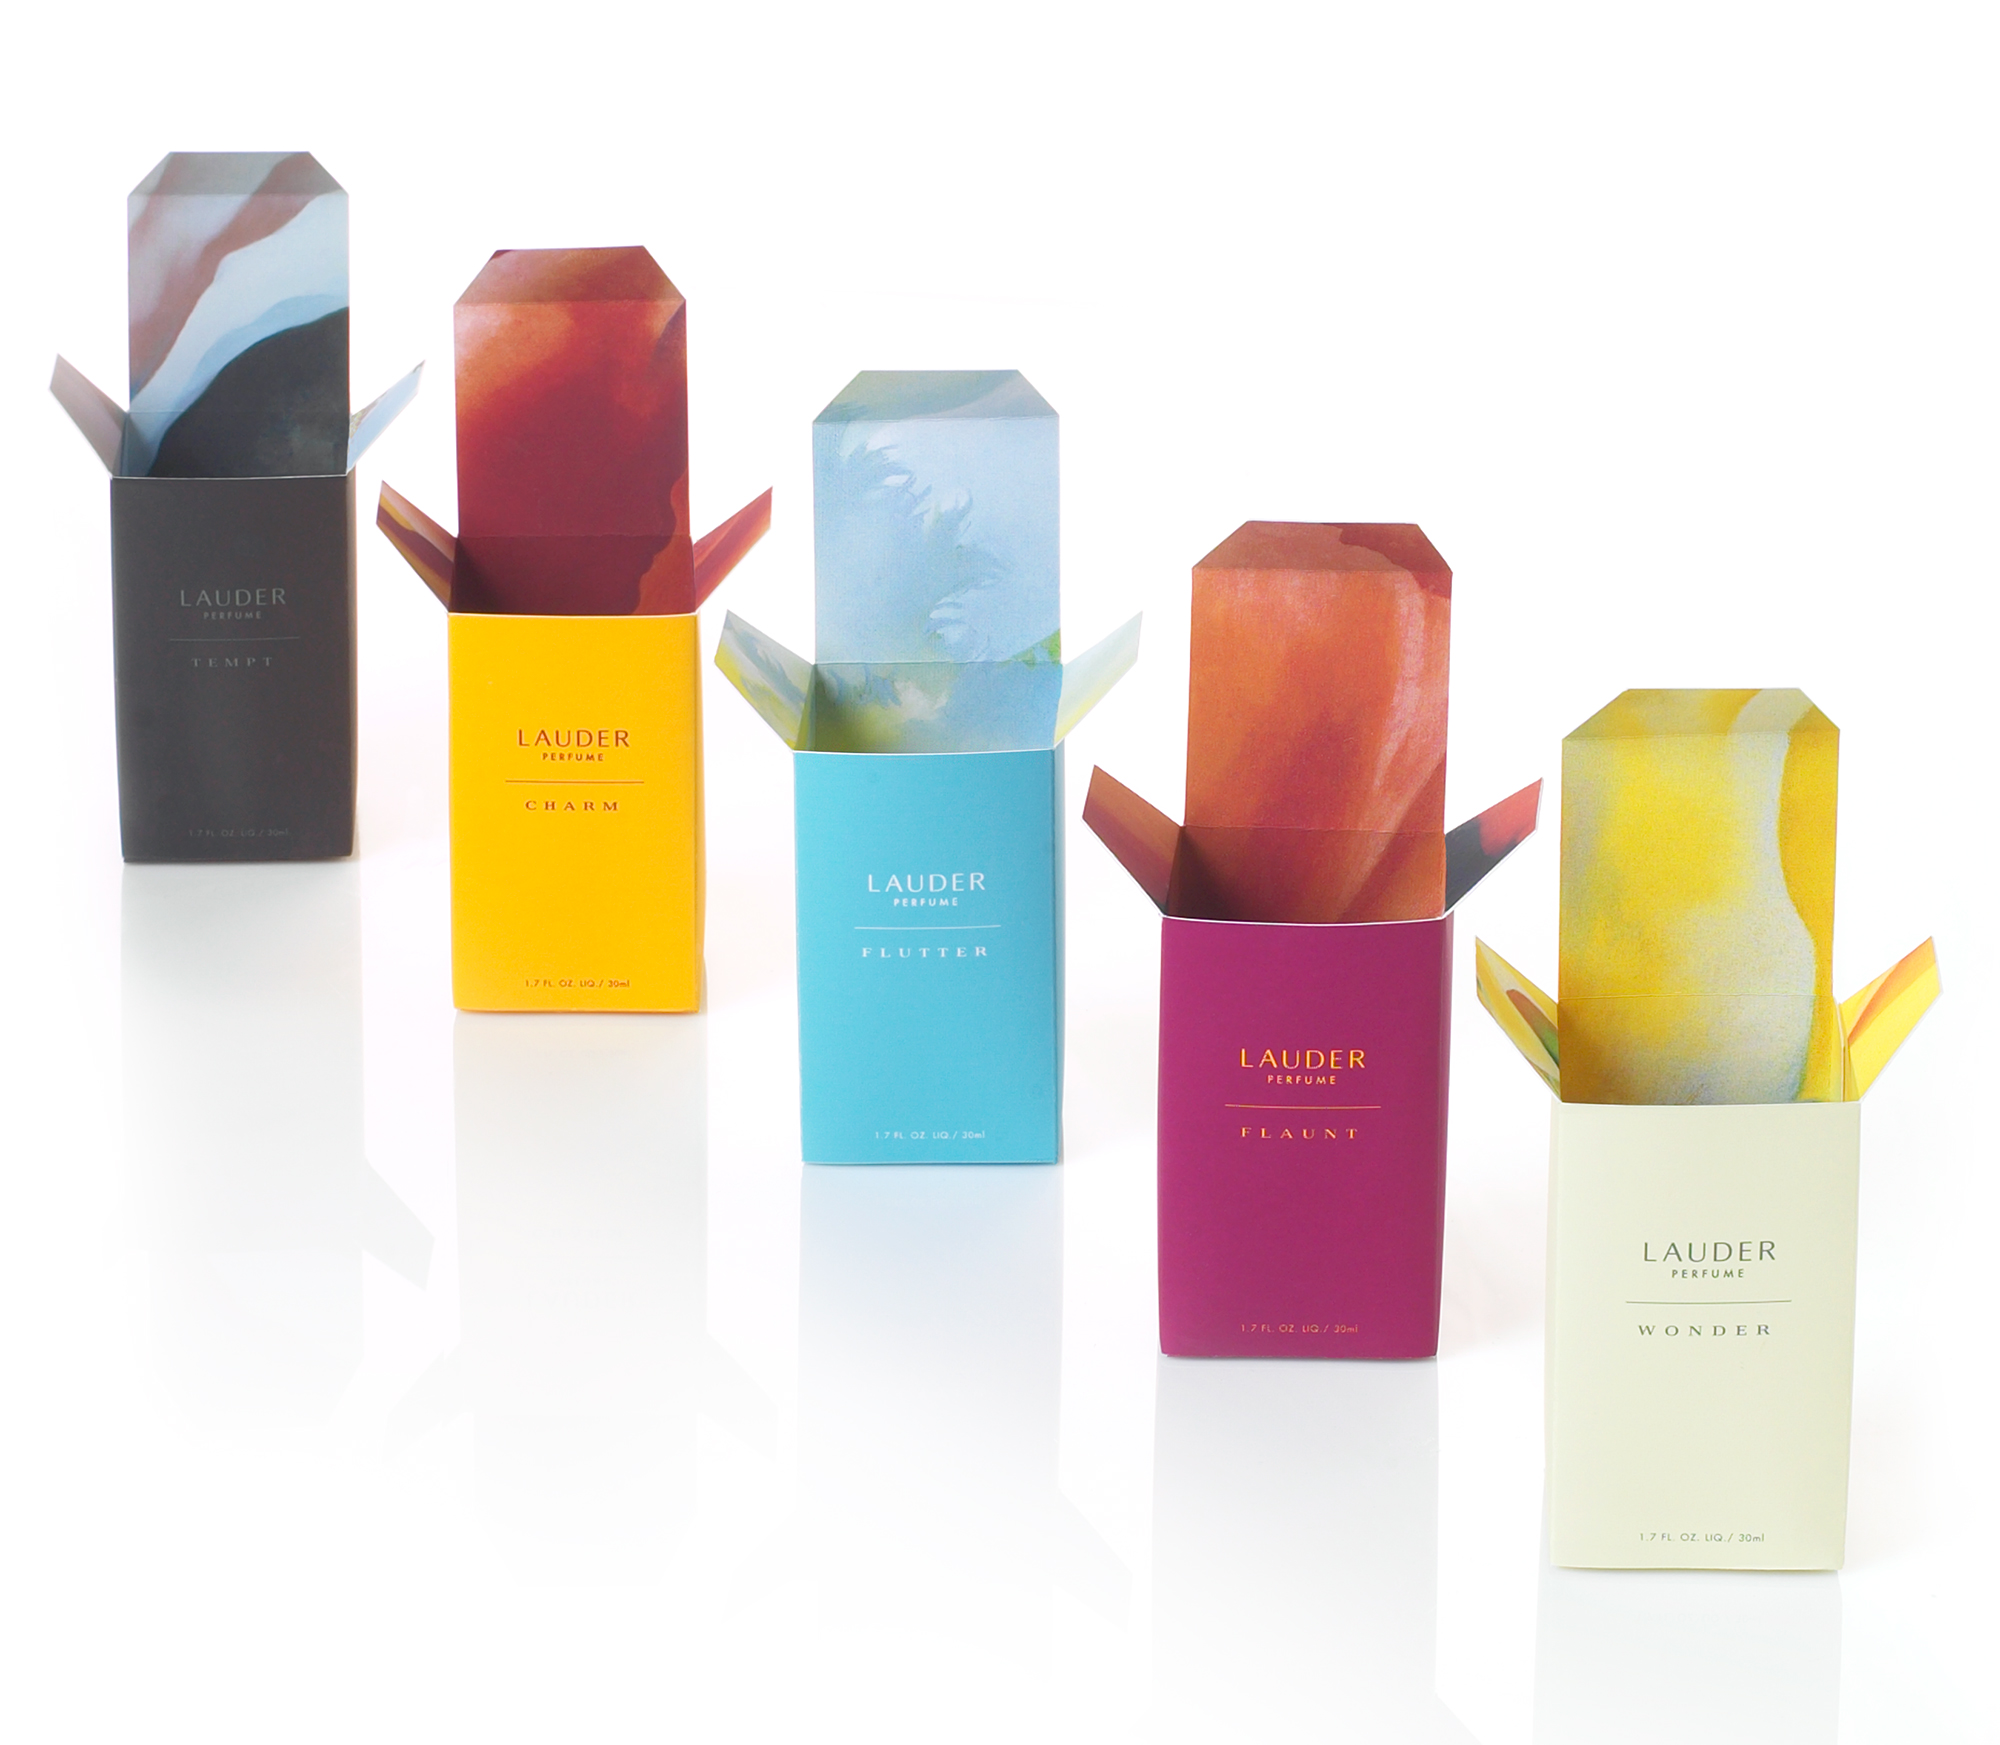 Lauder Perfume Package Design